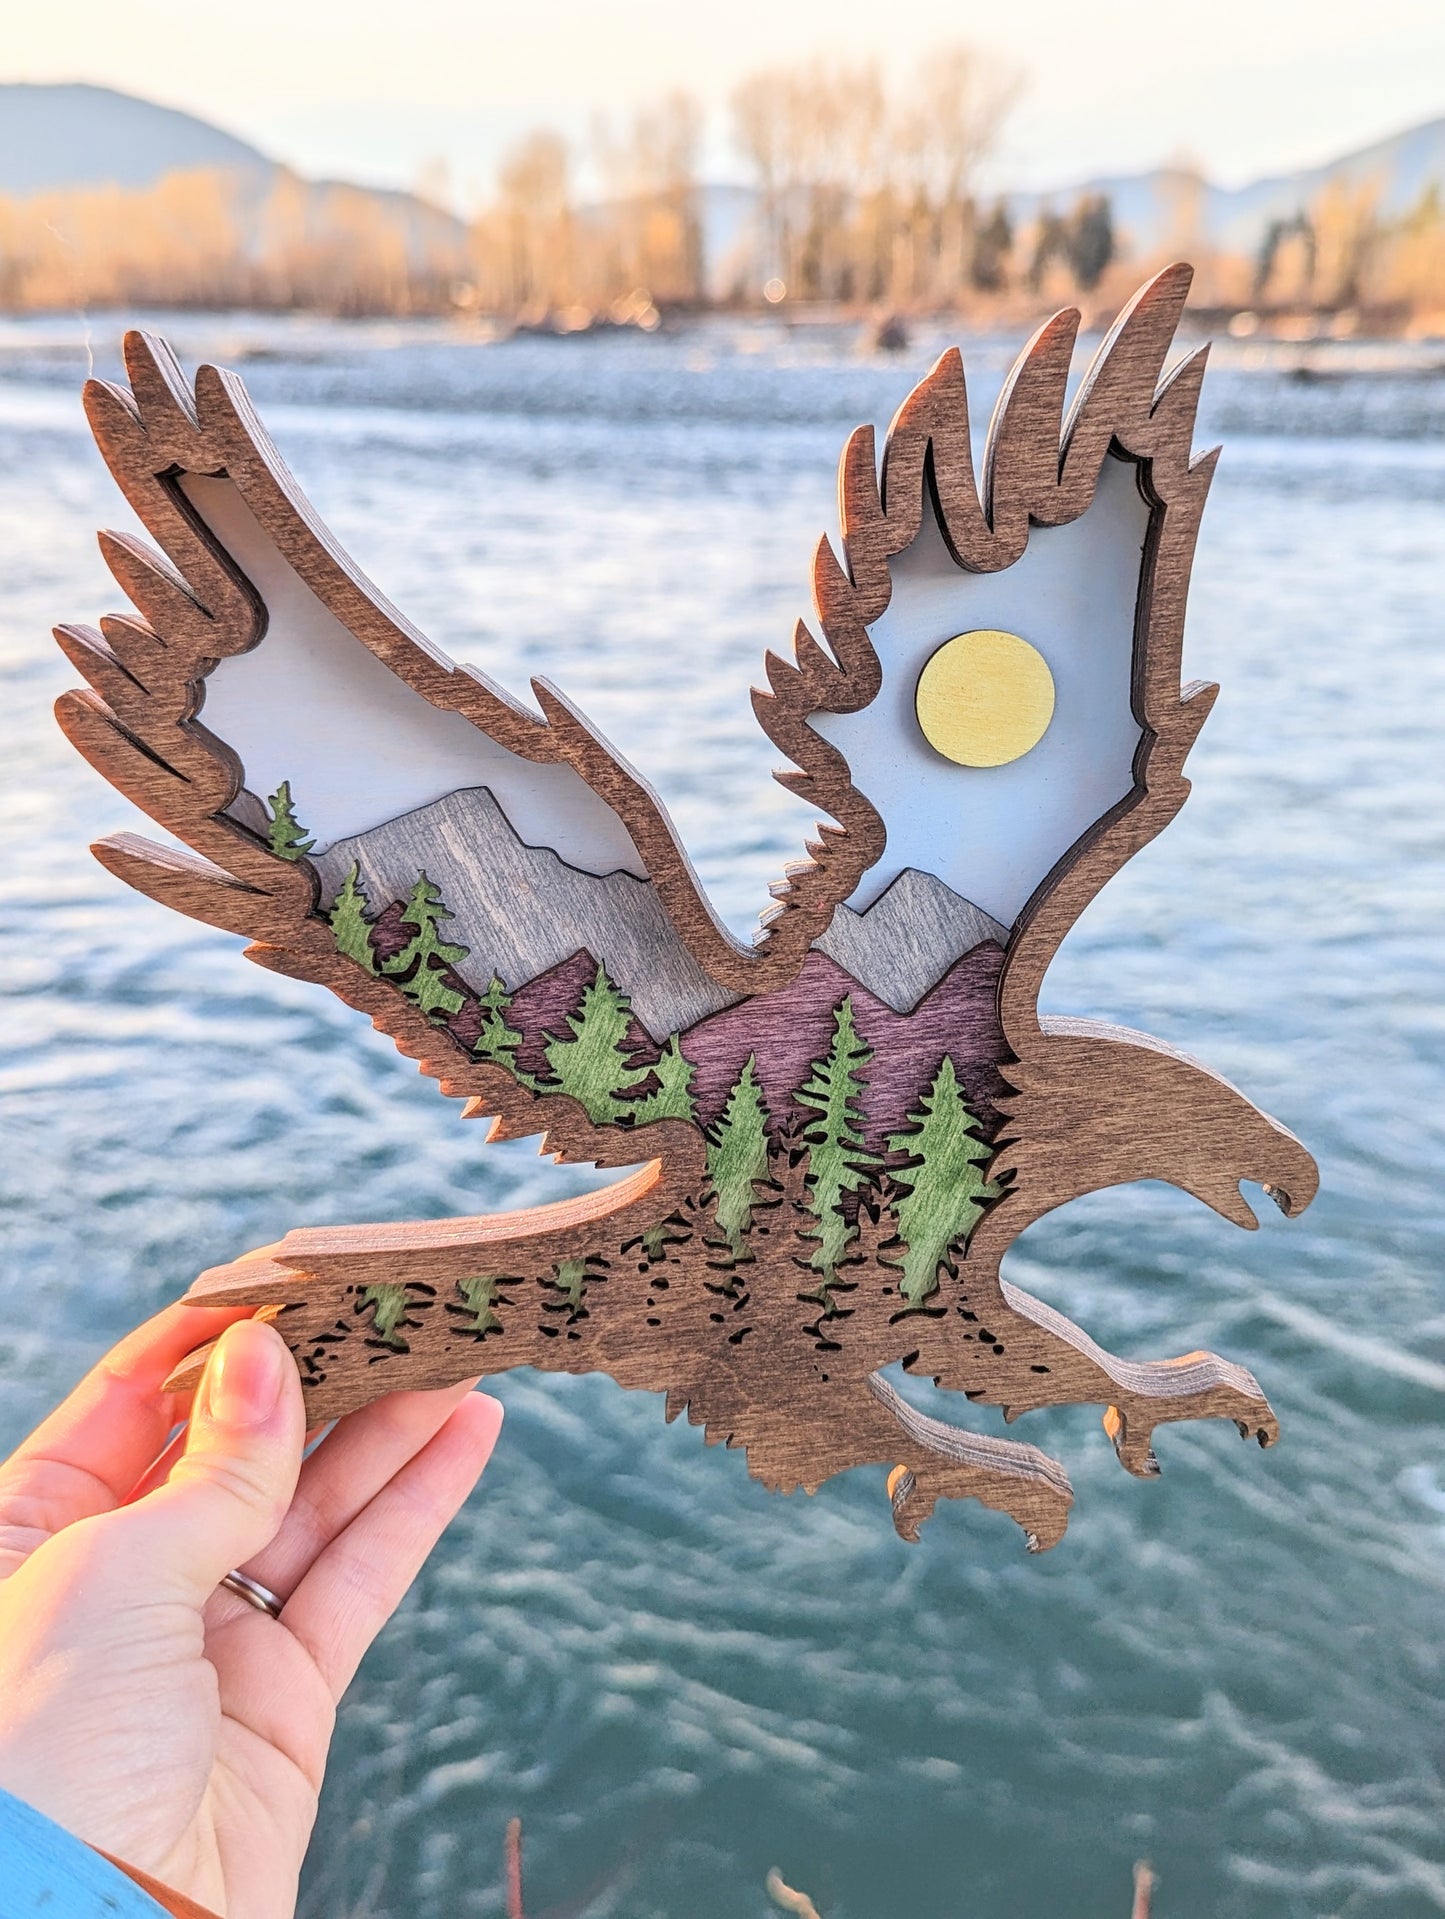 3D Layered Wooden Eagle Art / Eagle shaped layered mountain scene